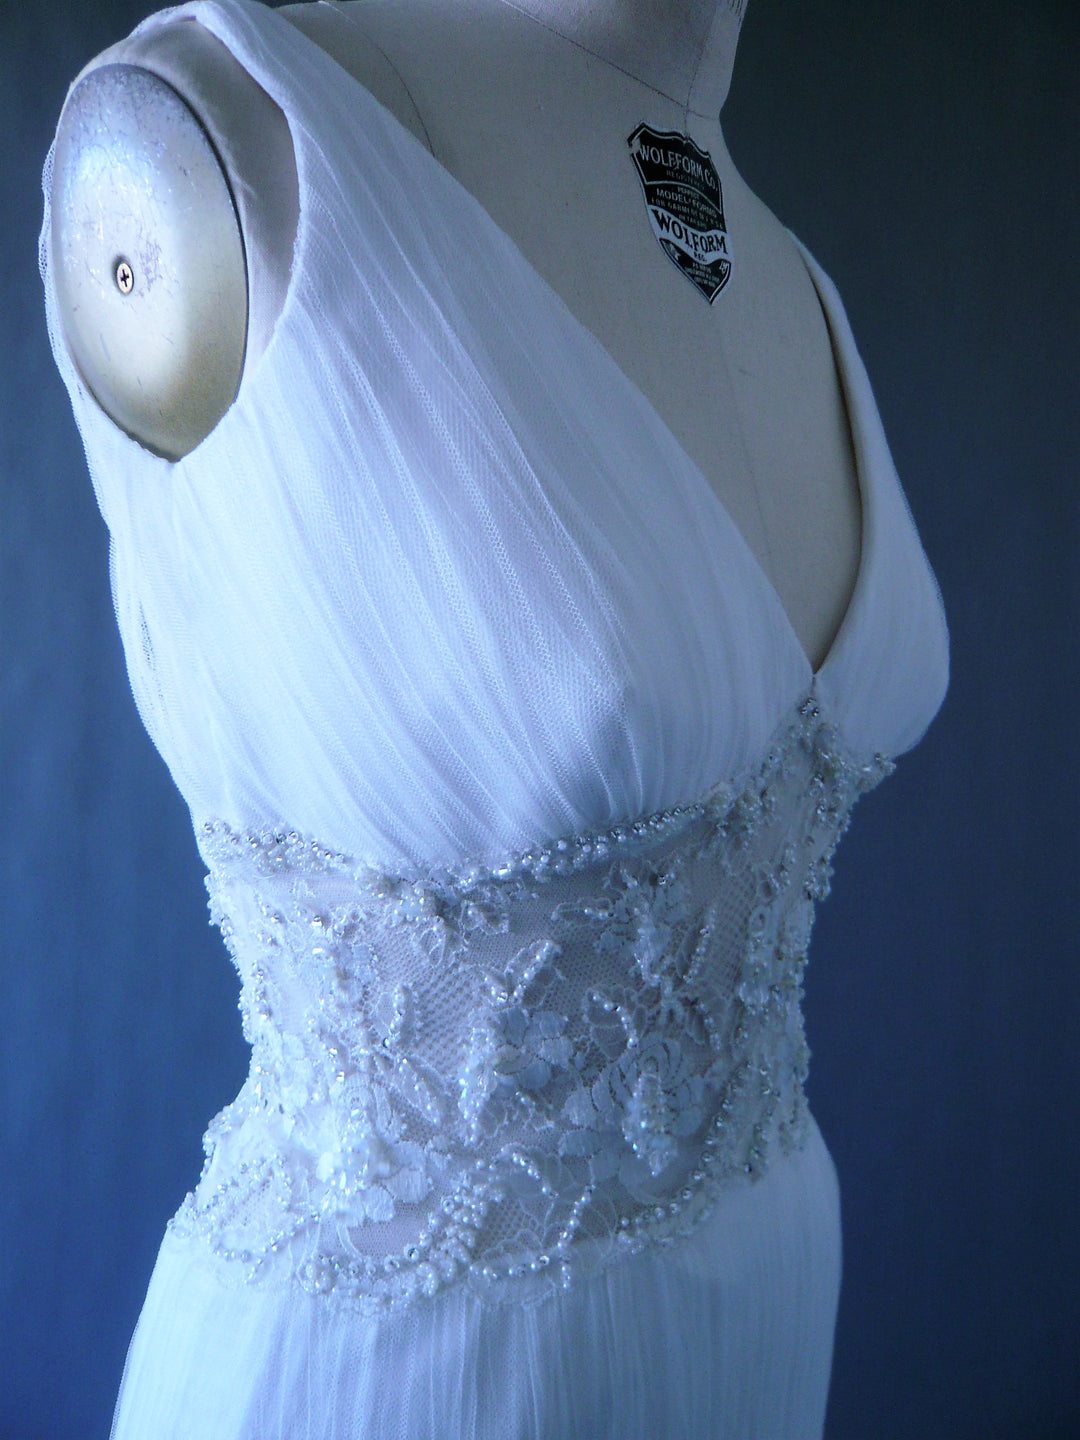 Cocoe Voci Design 'Daphne' Gown Size 6 (Street Size 2)